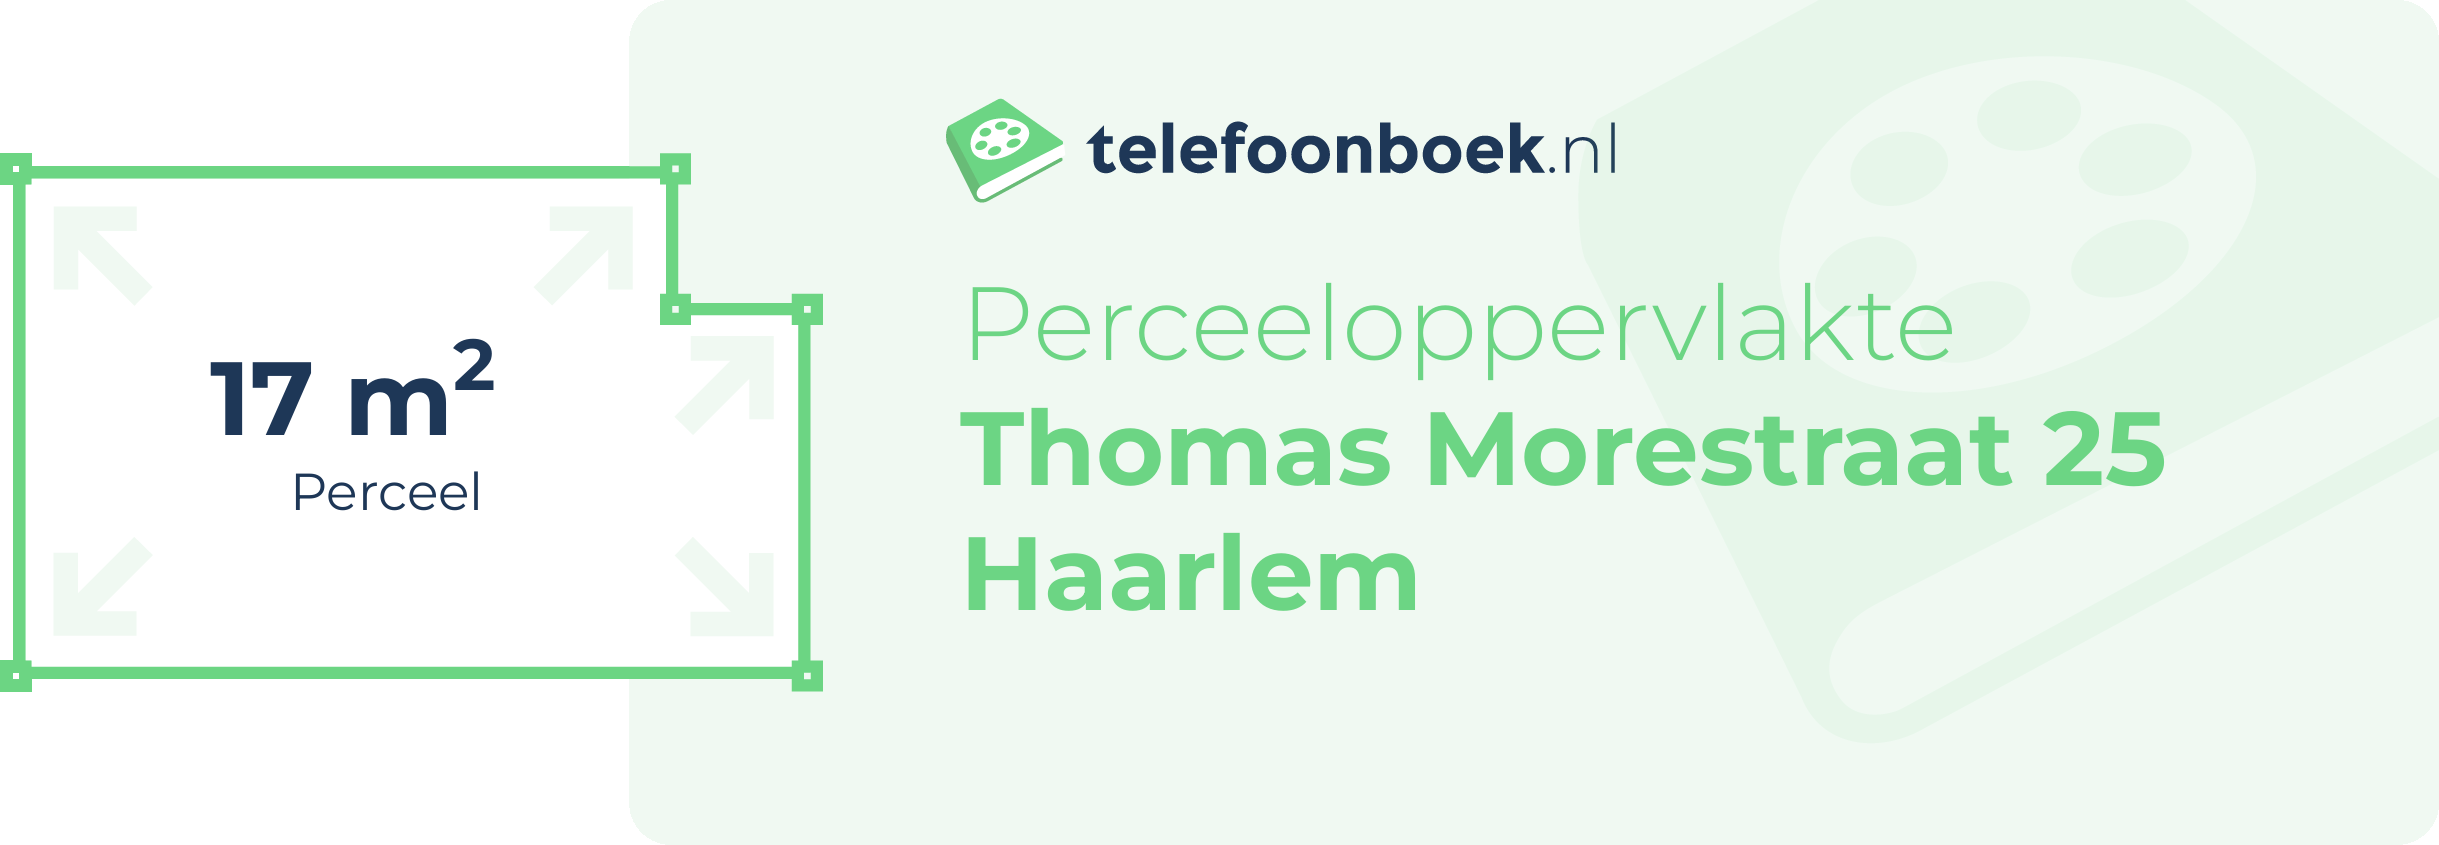 Perceeloppervlakte Thomas Morestraat 25 Haarlem